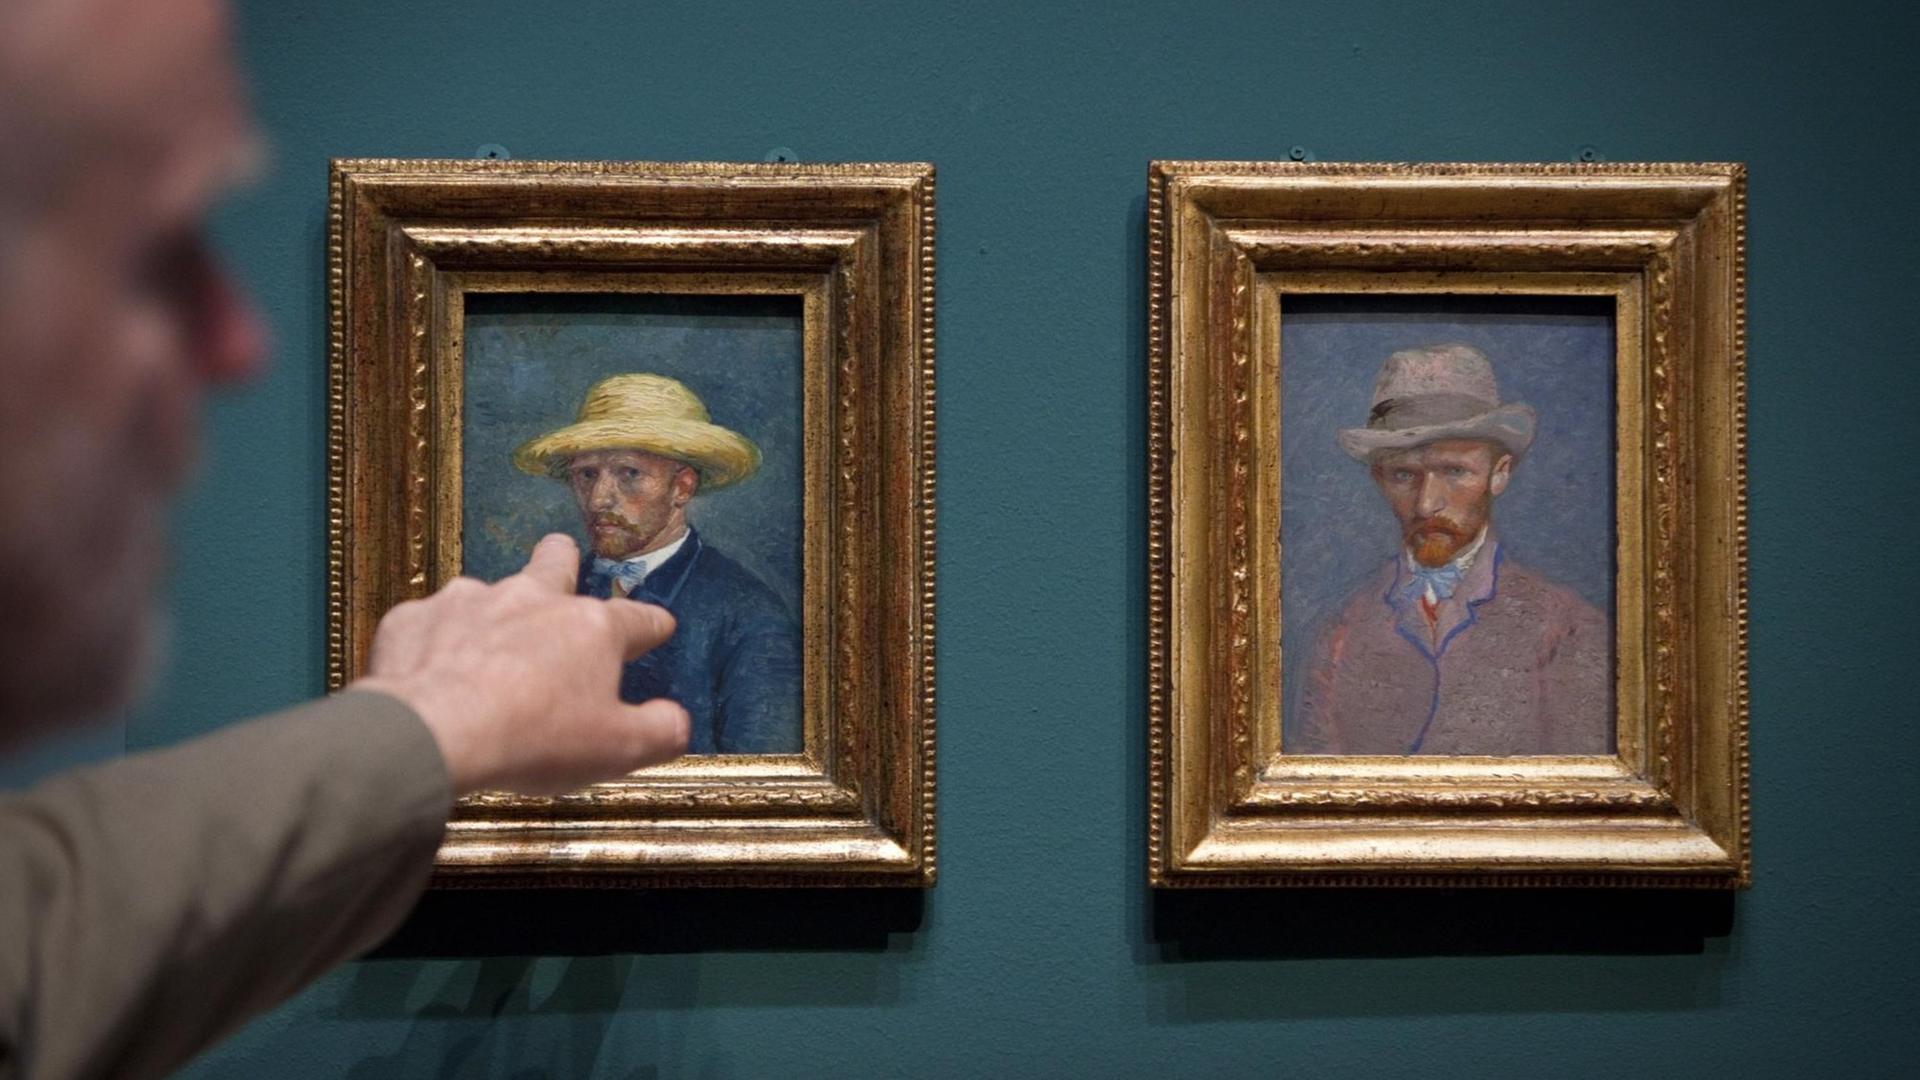 Gemälde im Van-Gogh-Museum Amsterdam: Ist Vincent oder Theo van Gogh abgebildet?